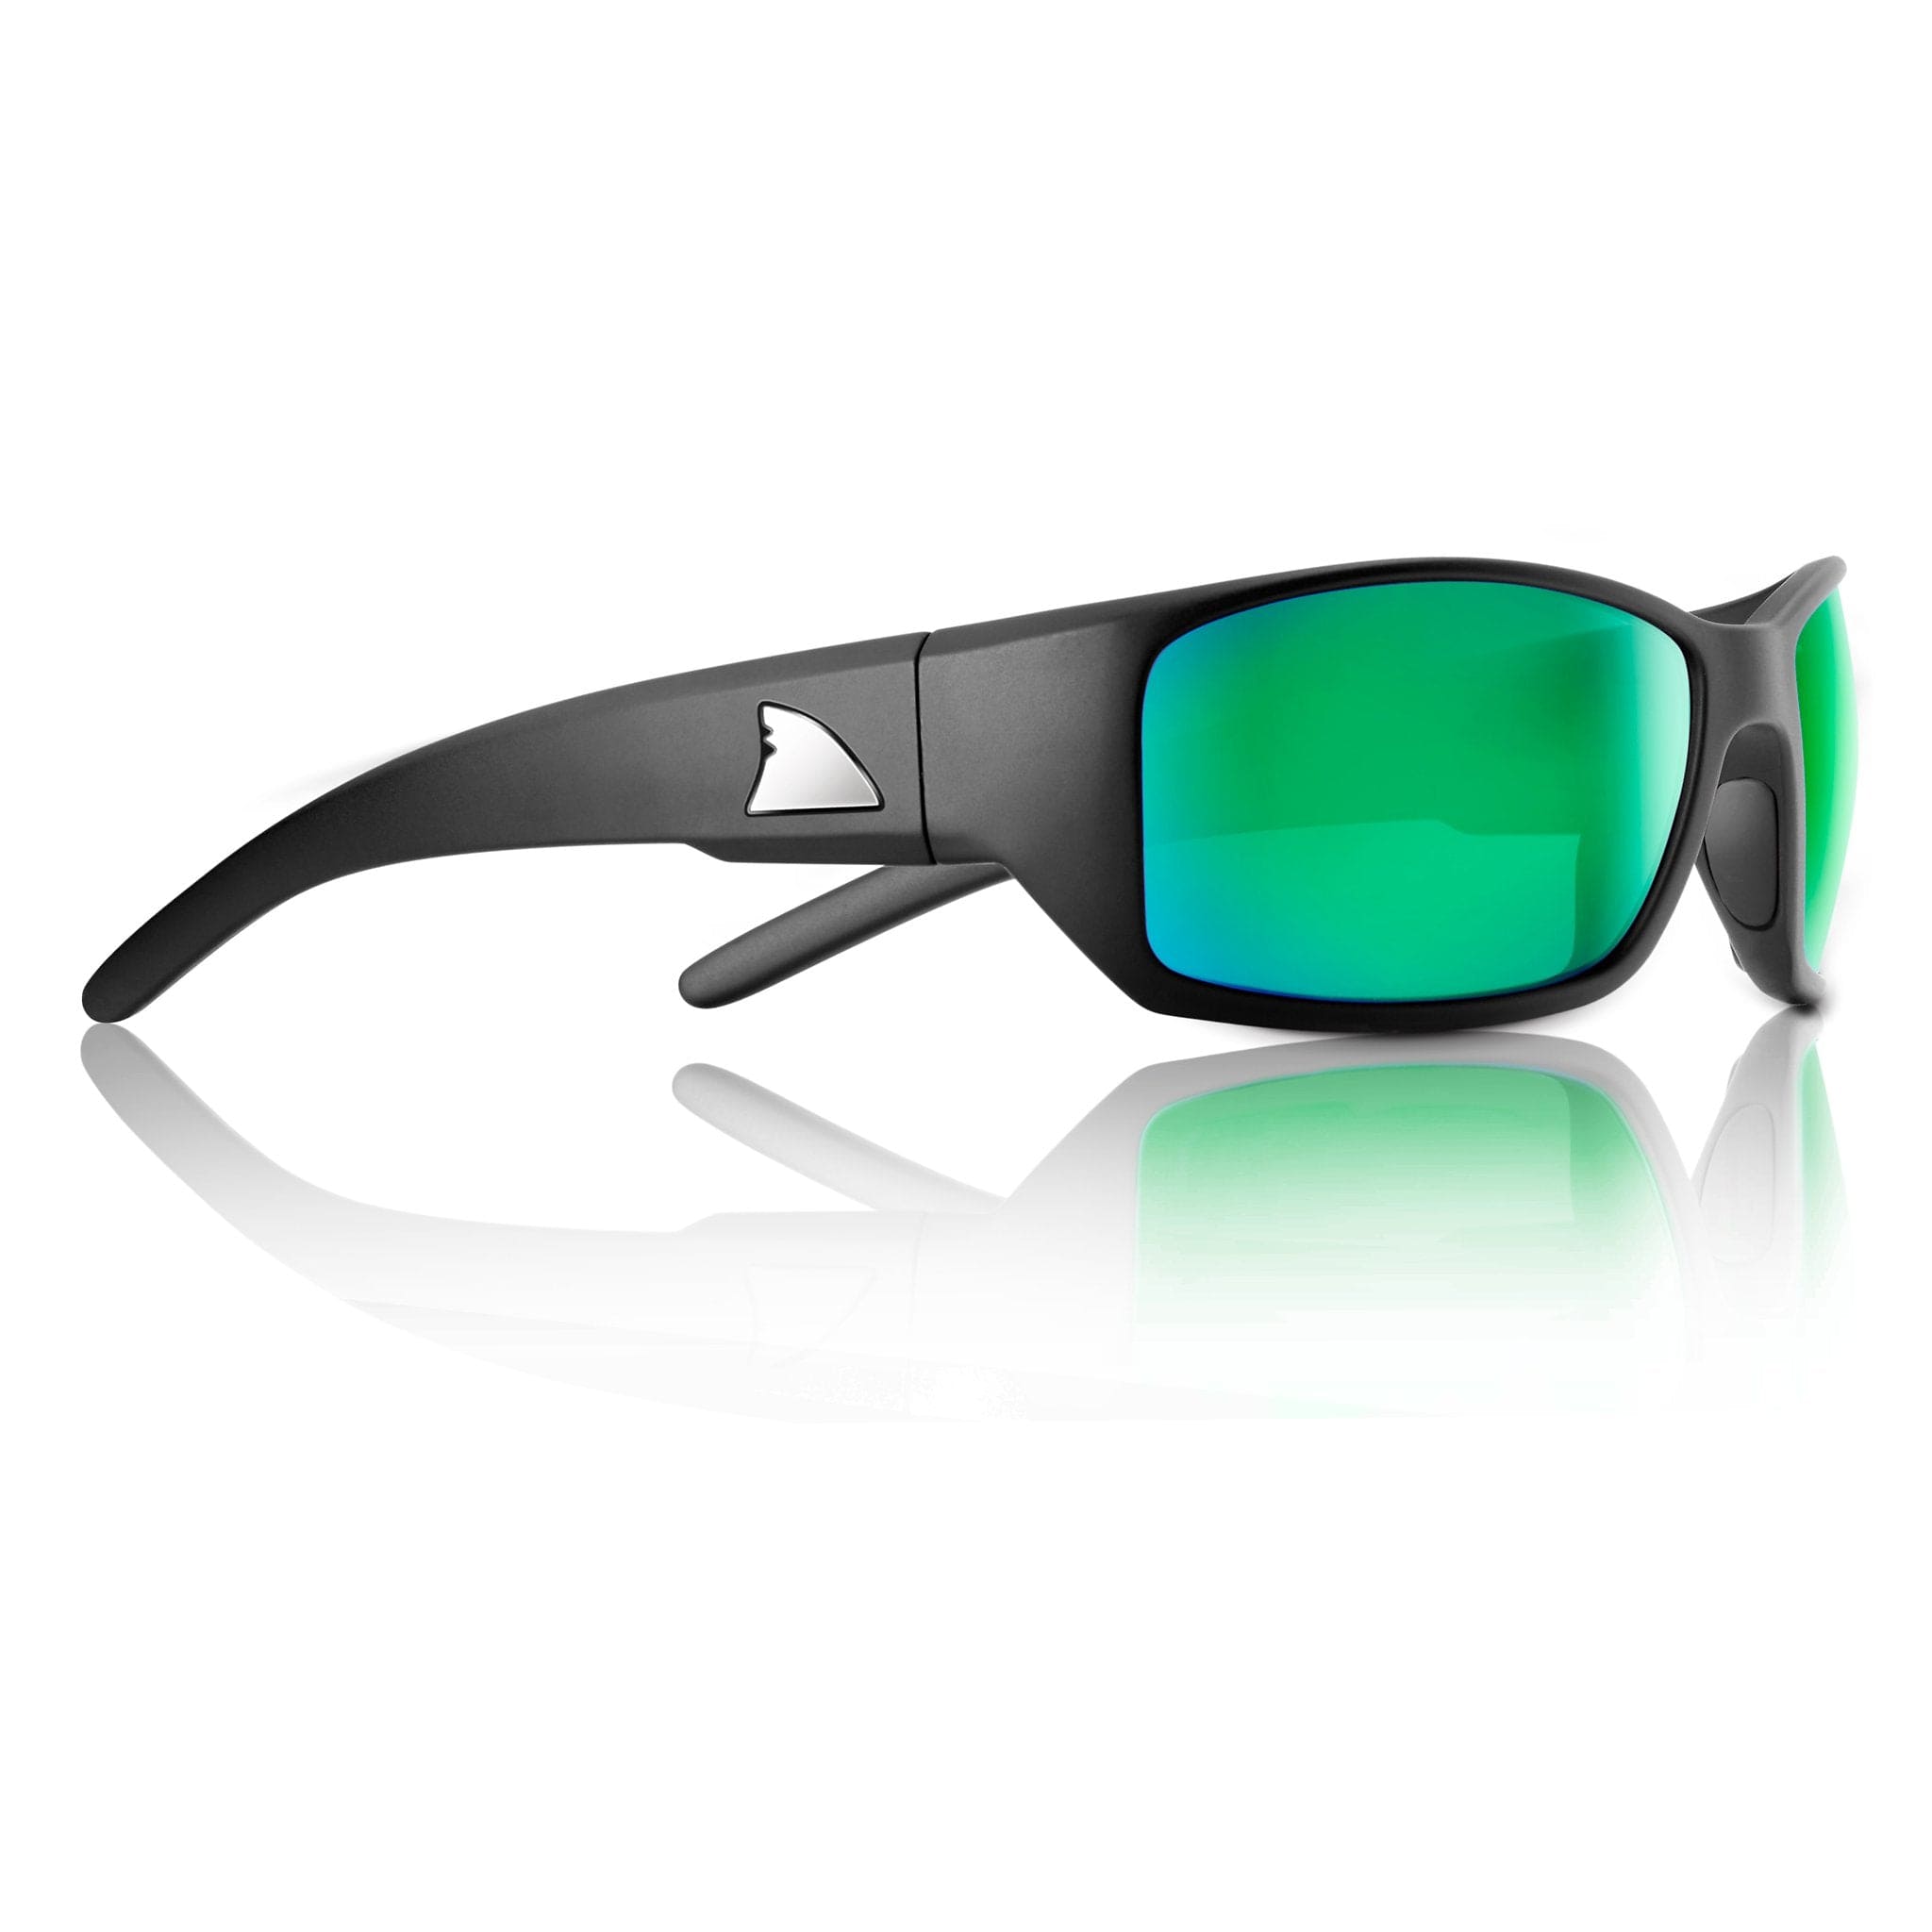 RedFin Wassaw Polarized Fishing Sunglasses